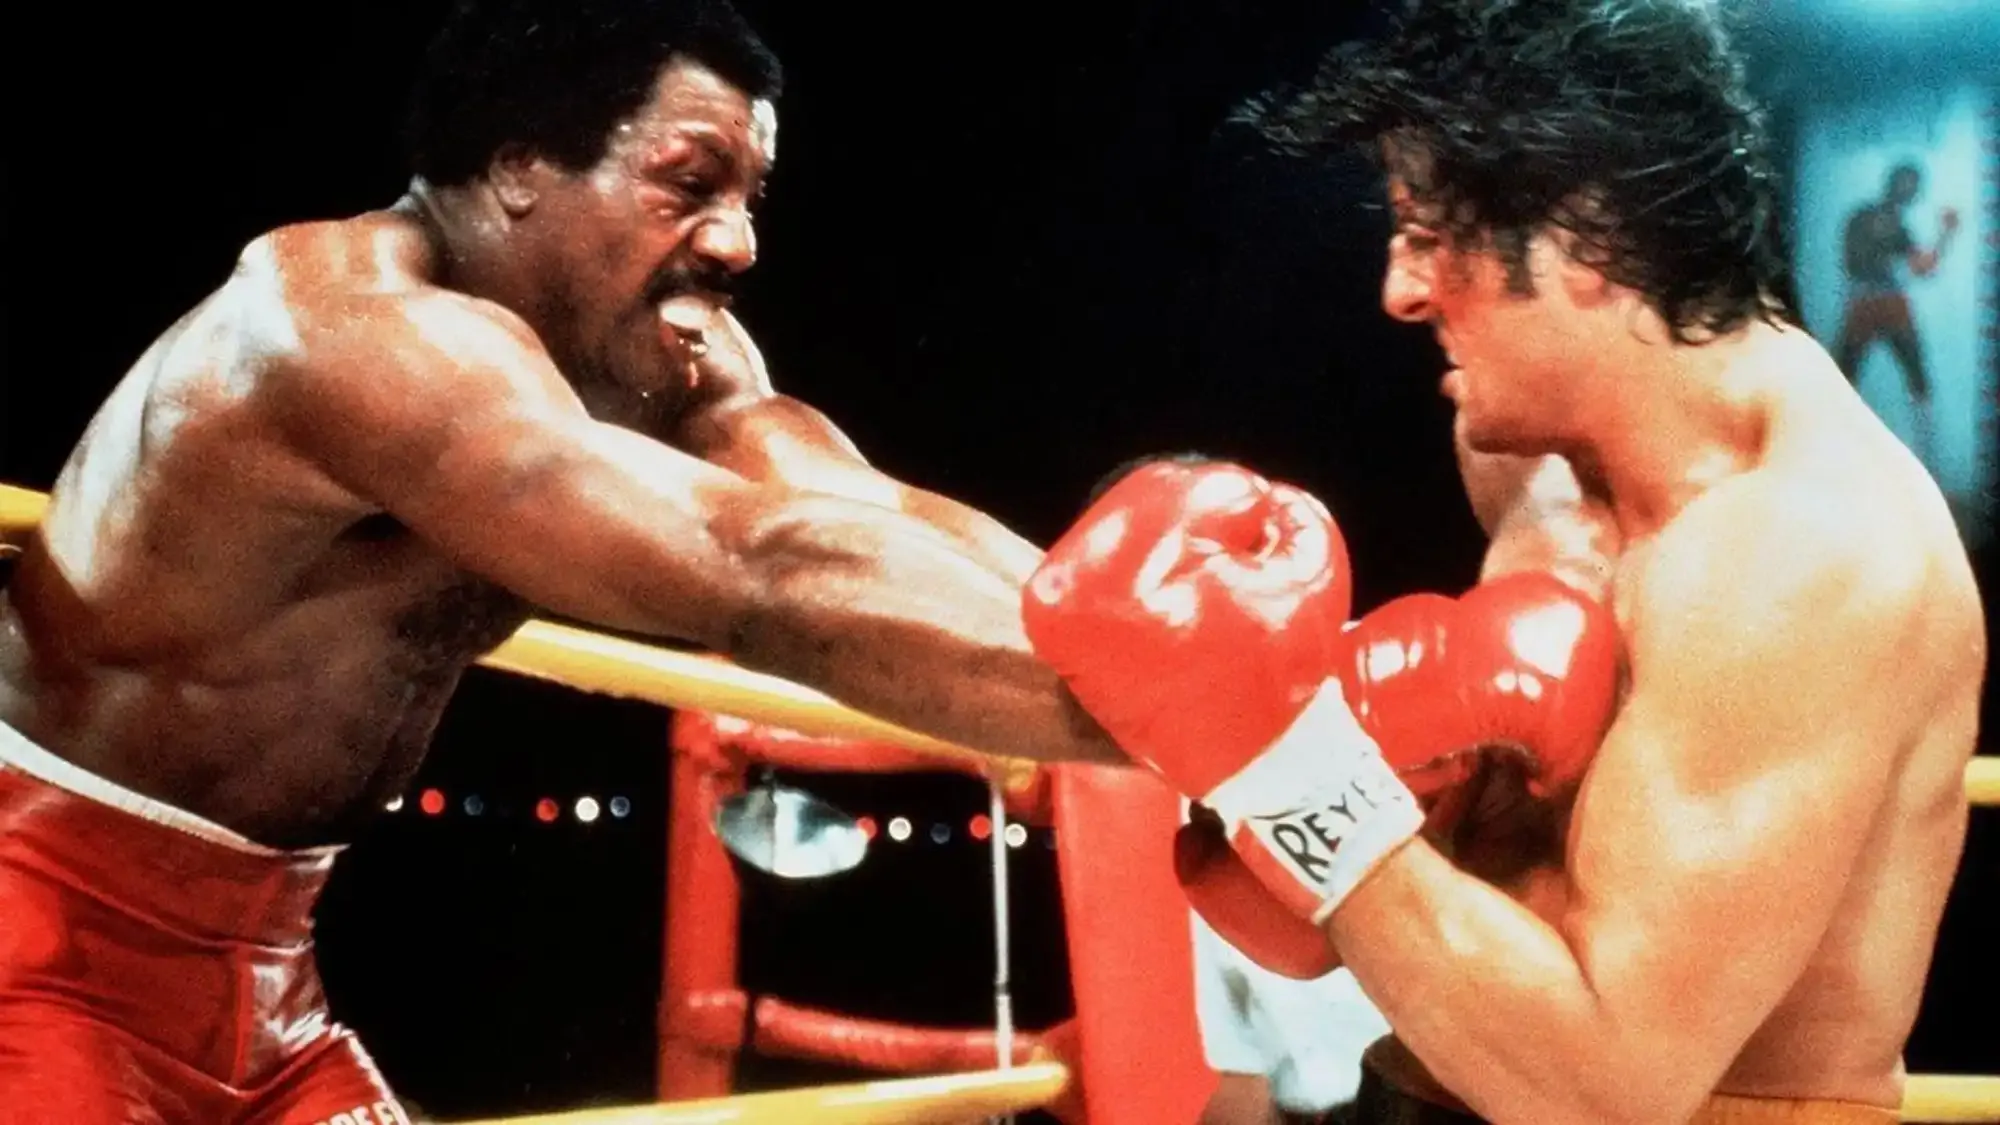 Rocky II movie review